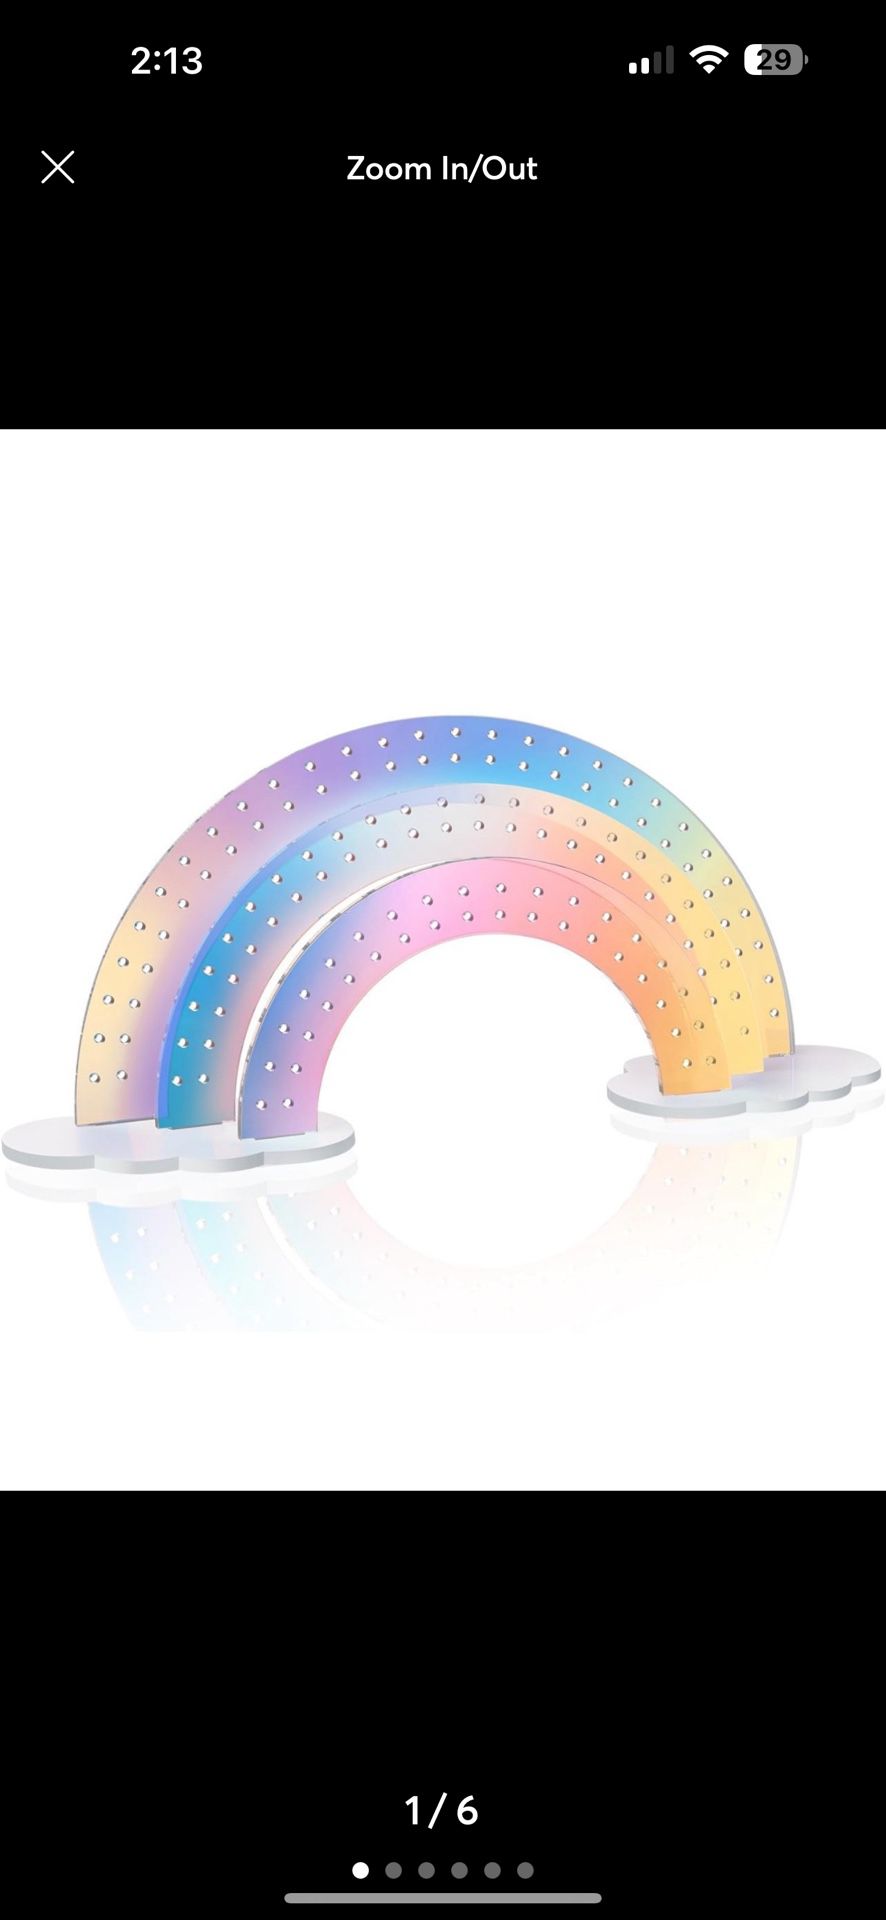 NiHome 3-Tier Iridescent Acrylic Rainbow Earring Organizer